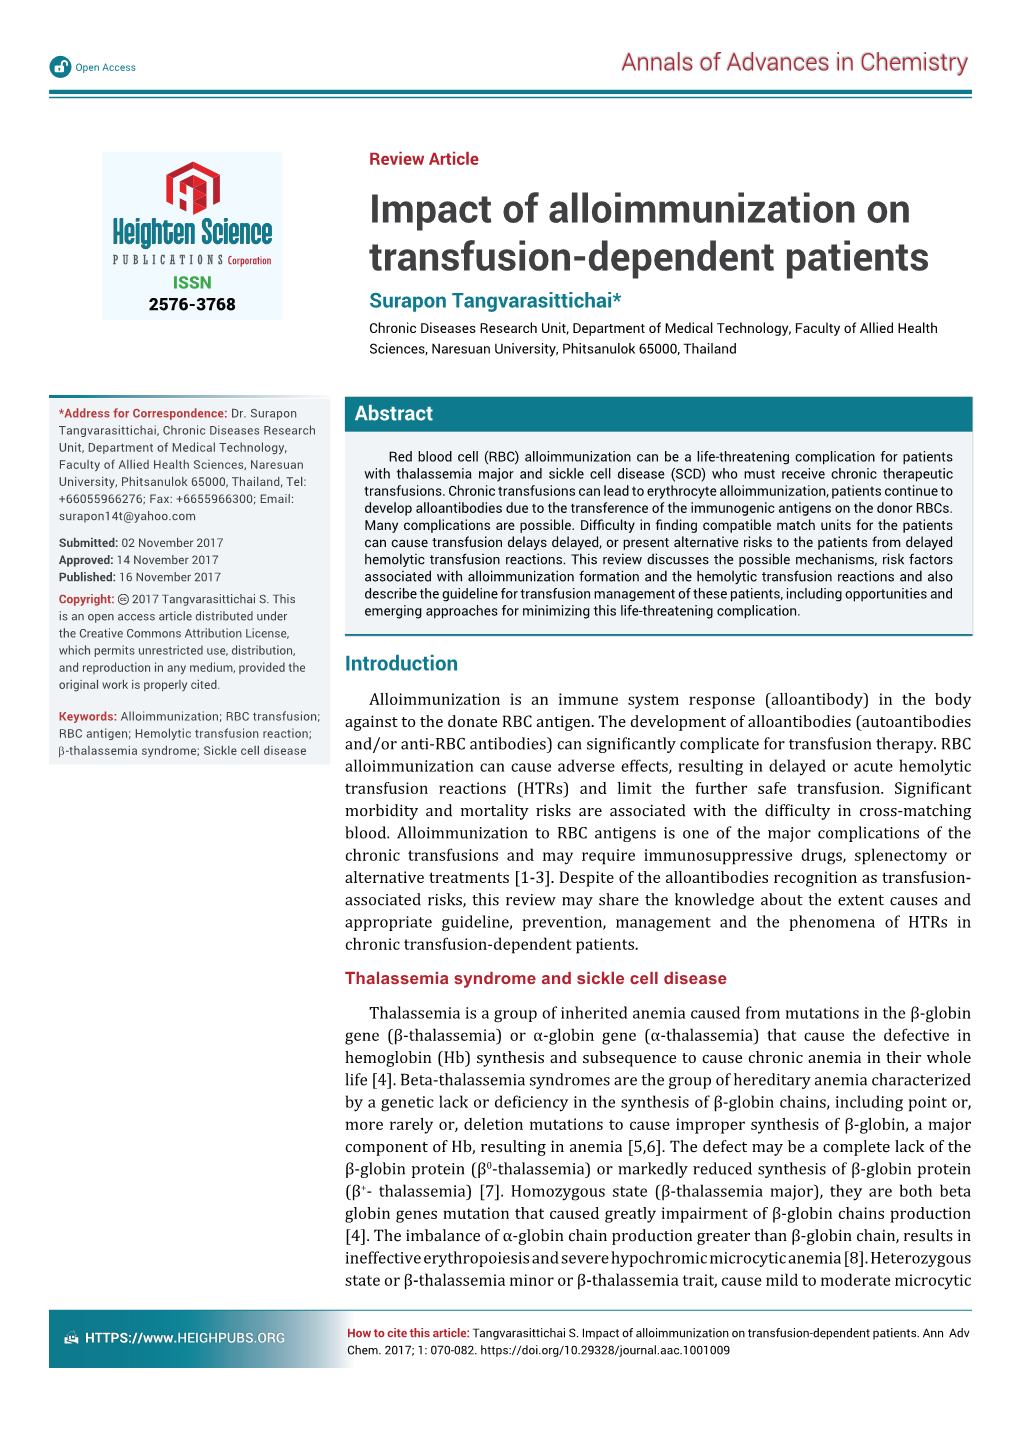 Impact of Alloimmunization on Transfusion-Dependent Patients